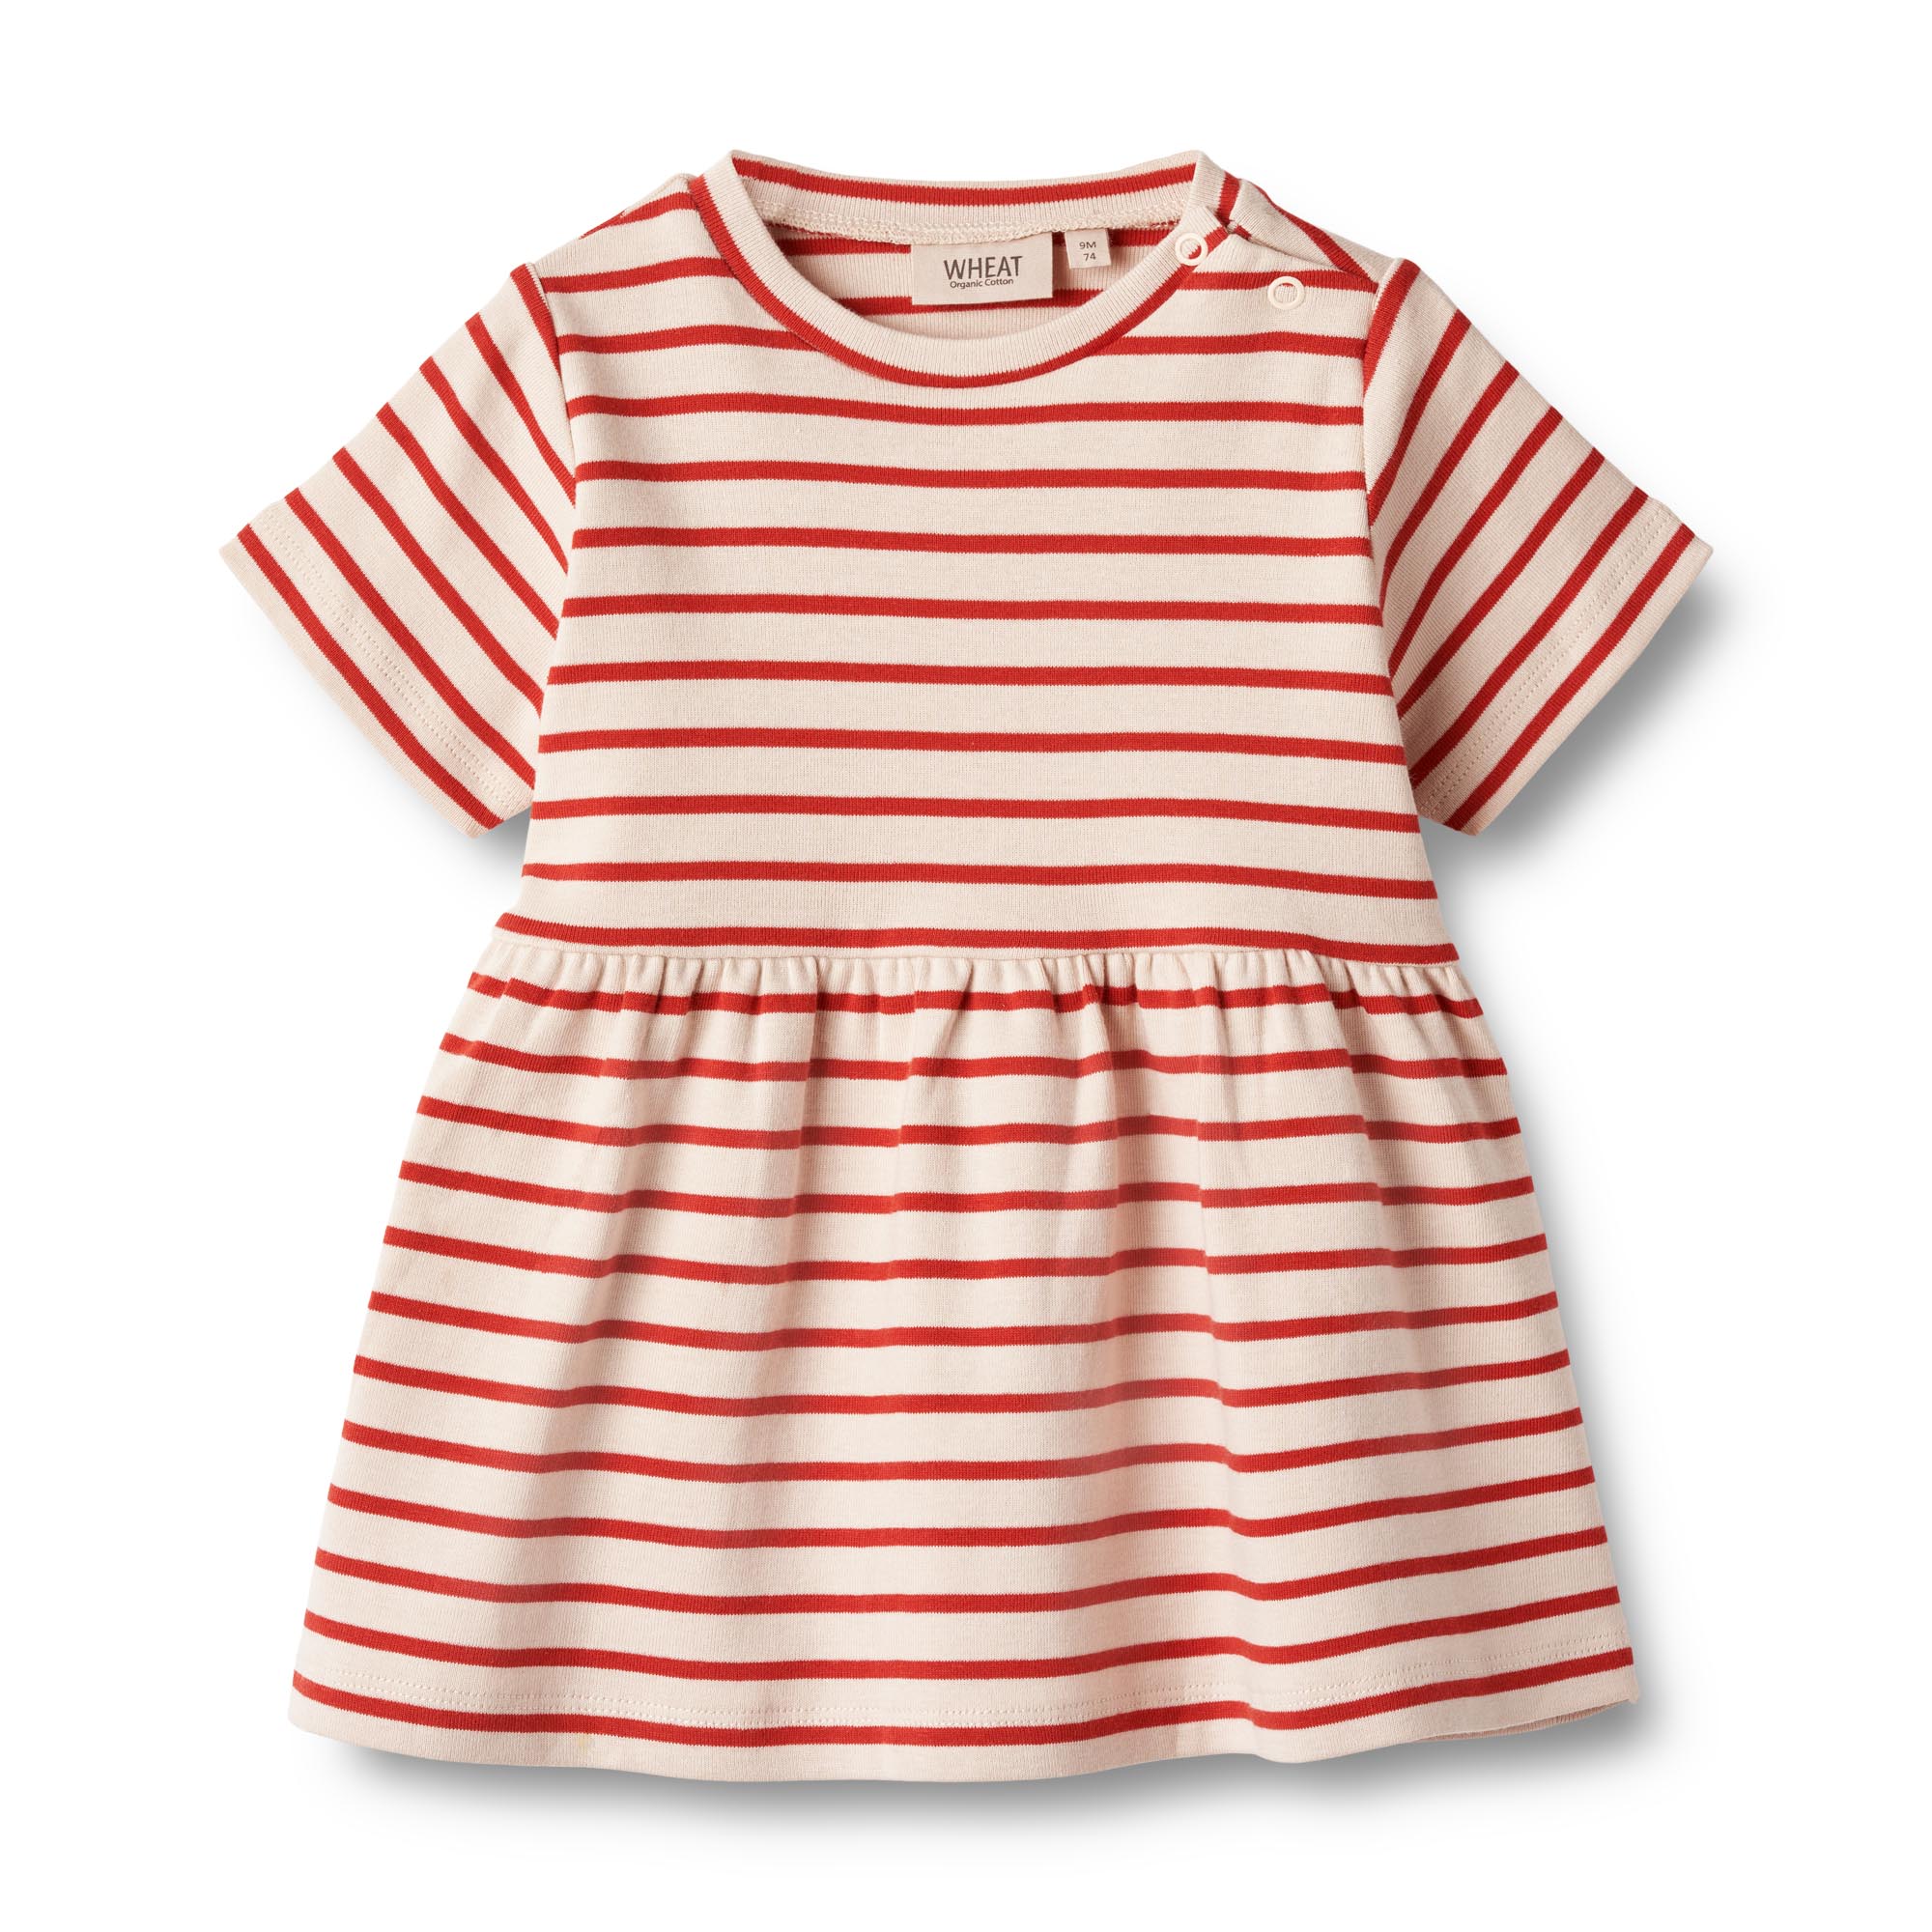 Jeff&Joy-Wheat-Jersey-Dress-S-S-Anna-2078-red-stripe